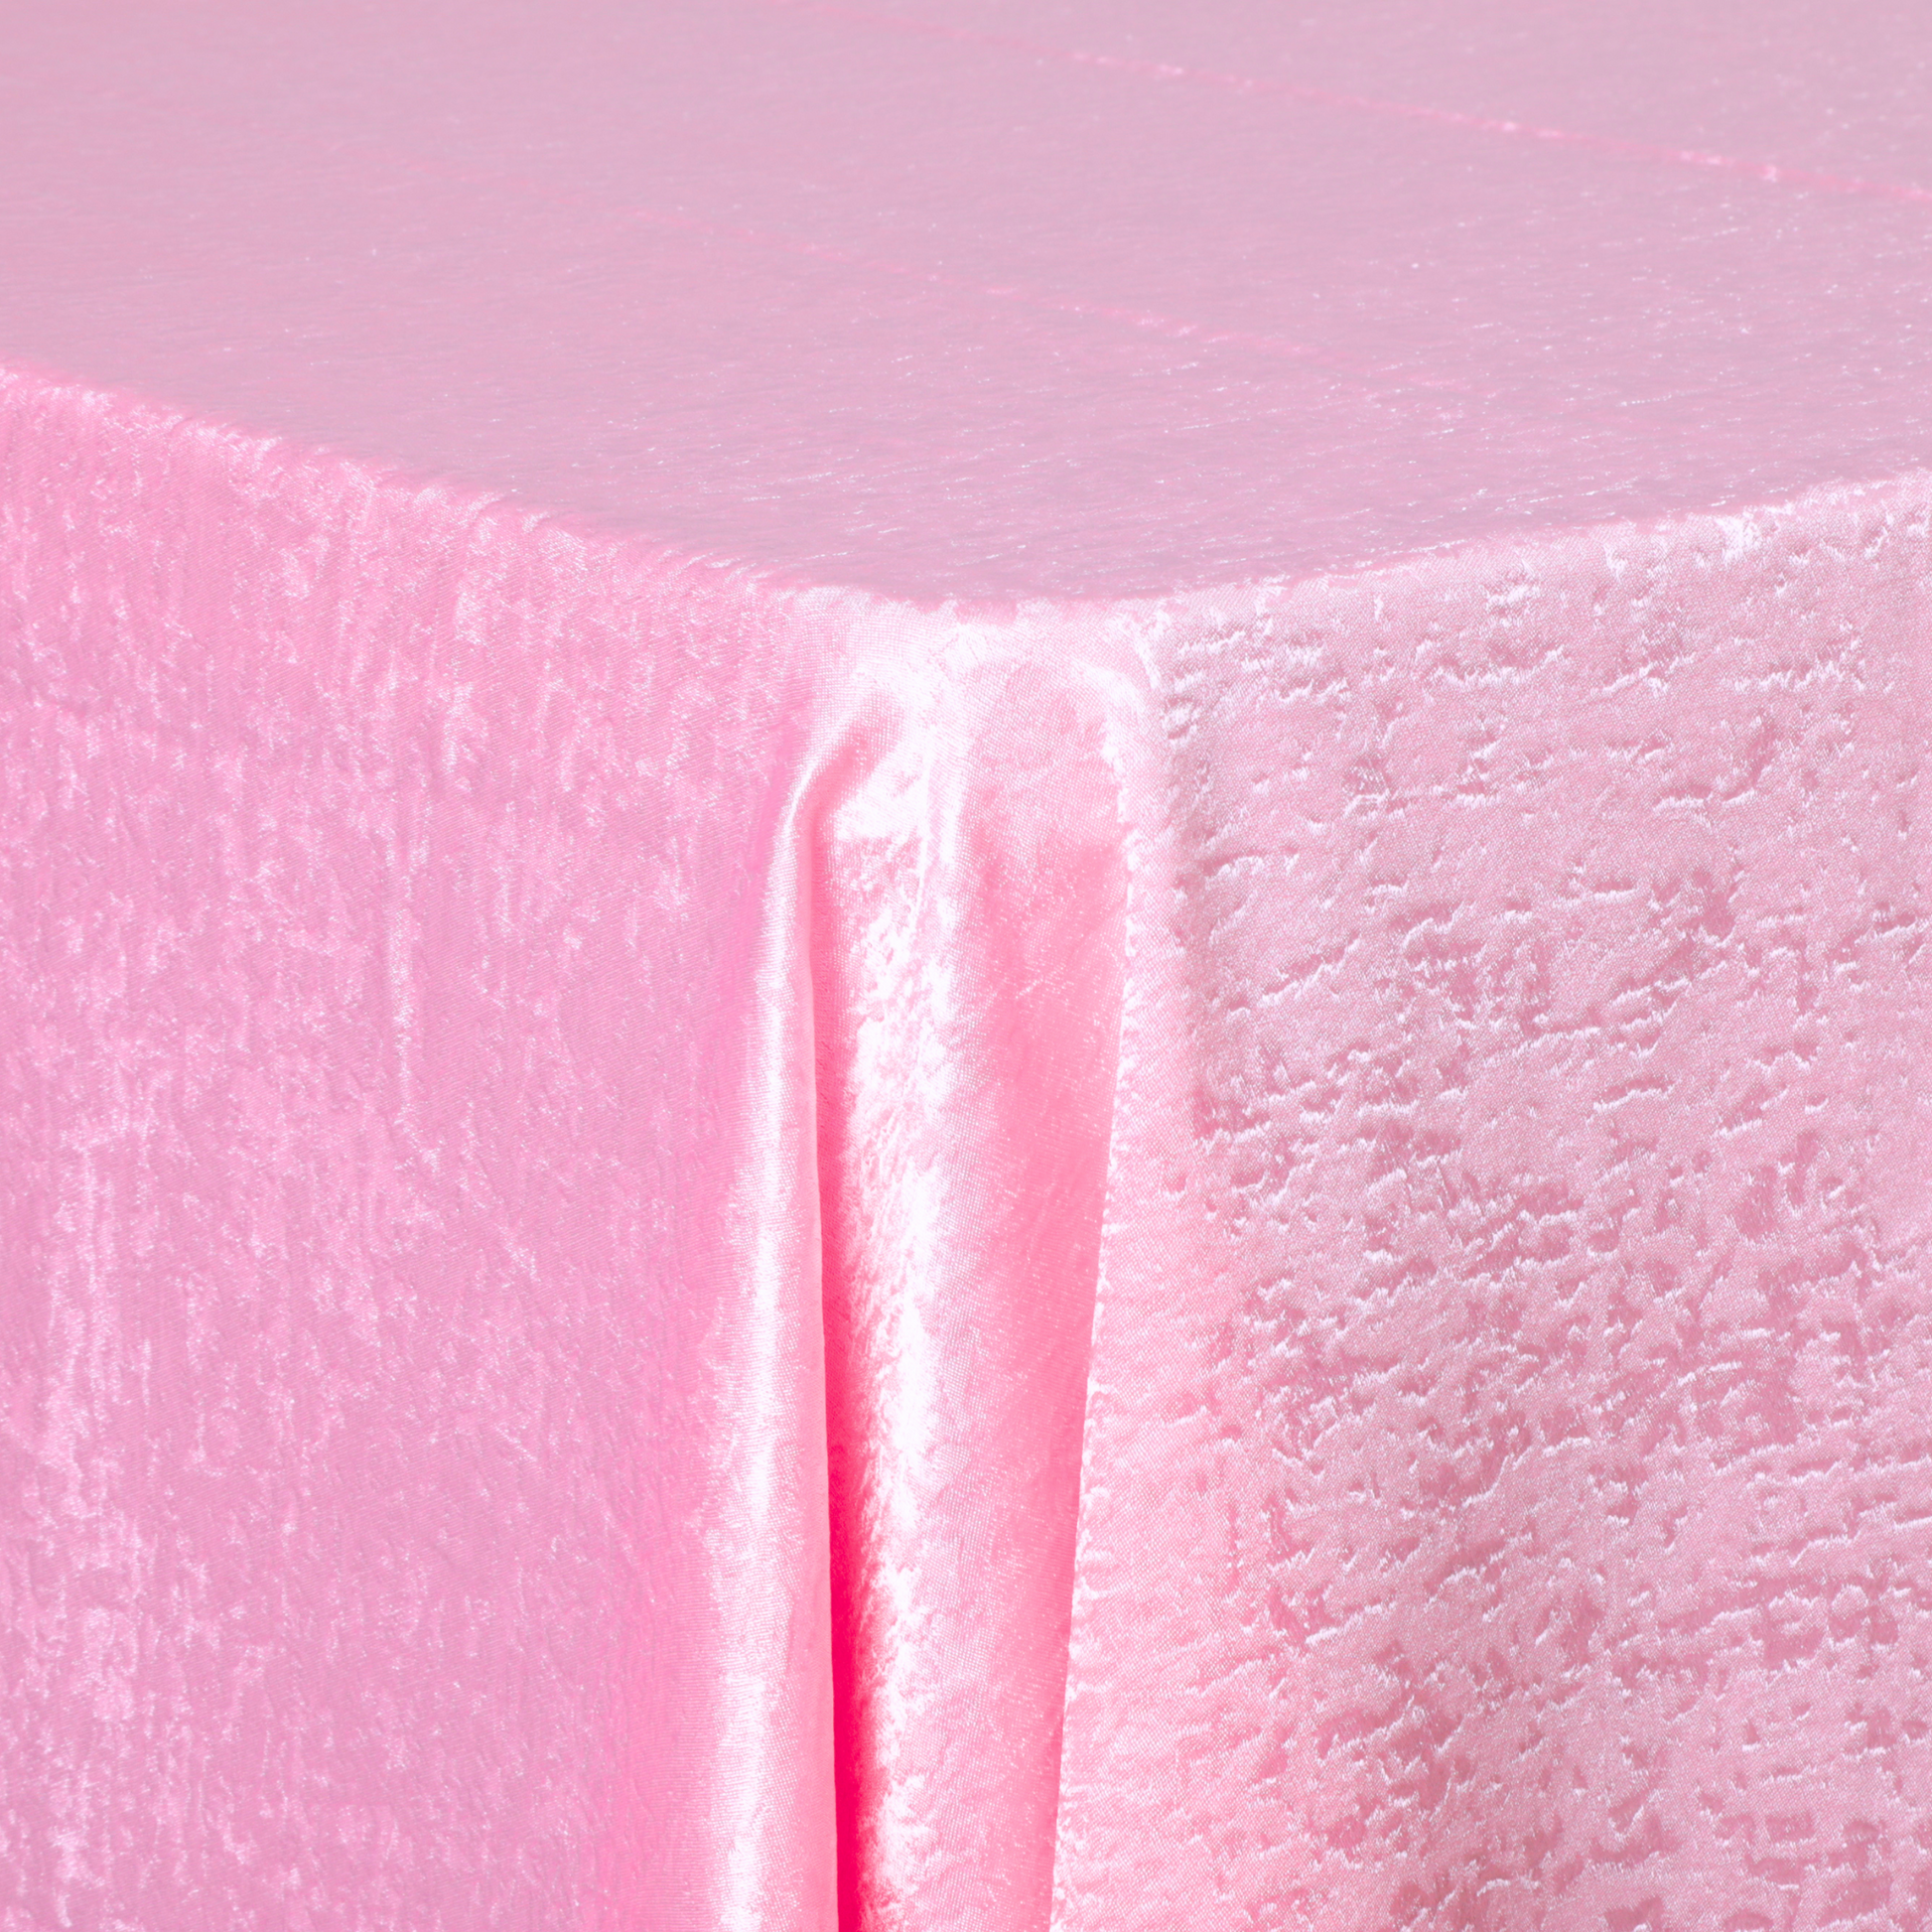 Crinkle Shimmer 90"x132" Rectangular Tablecloth - Pink